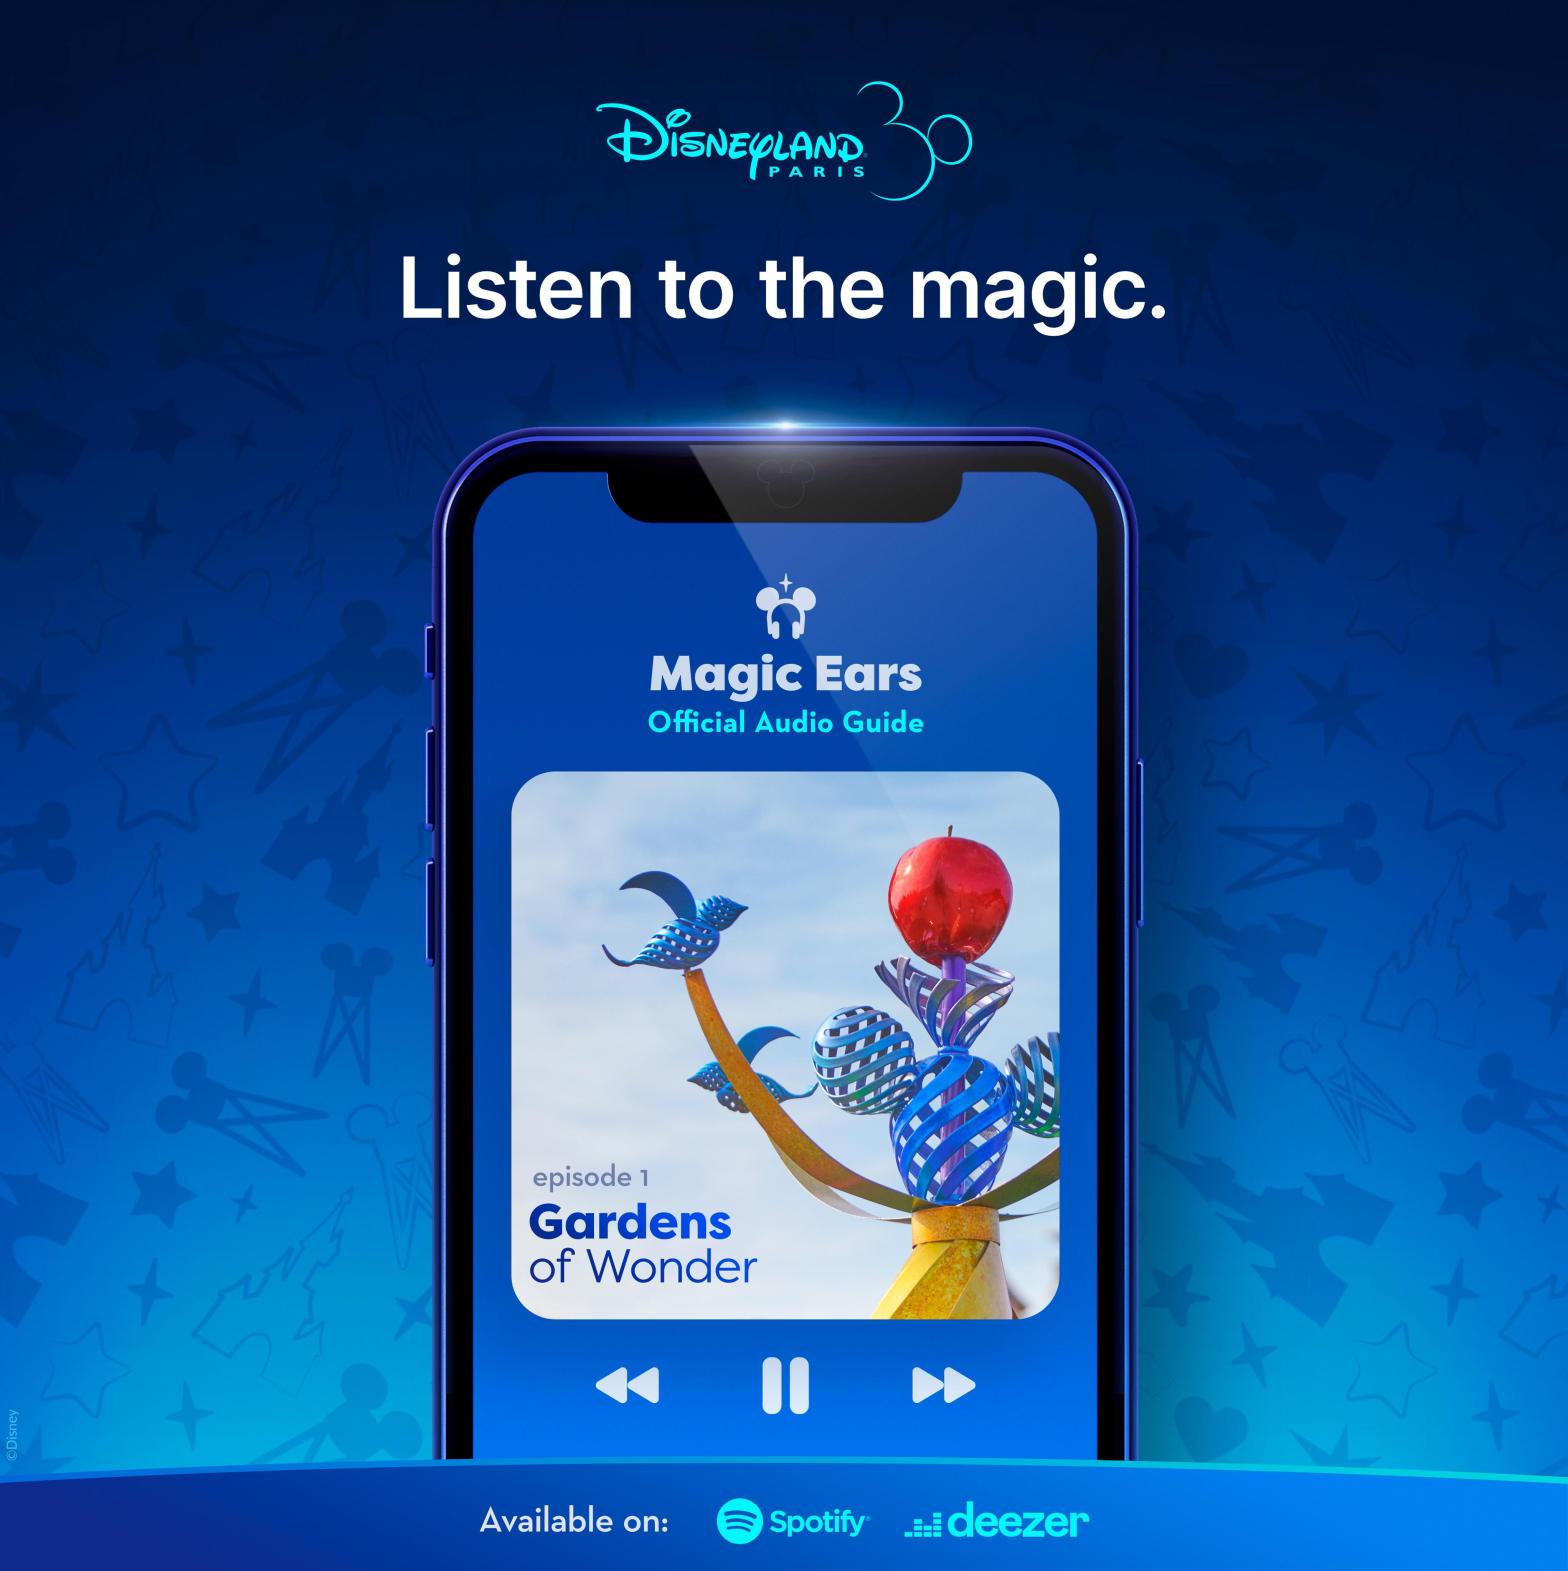 New Gardens of Wonder Audio Guide Released | Disneyland Paris